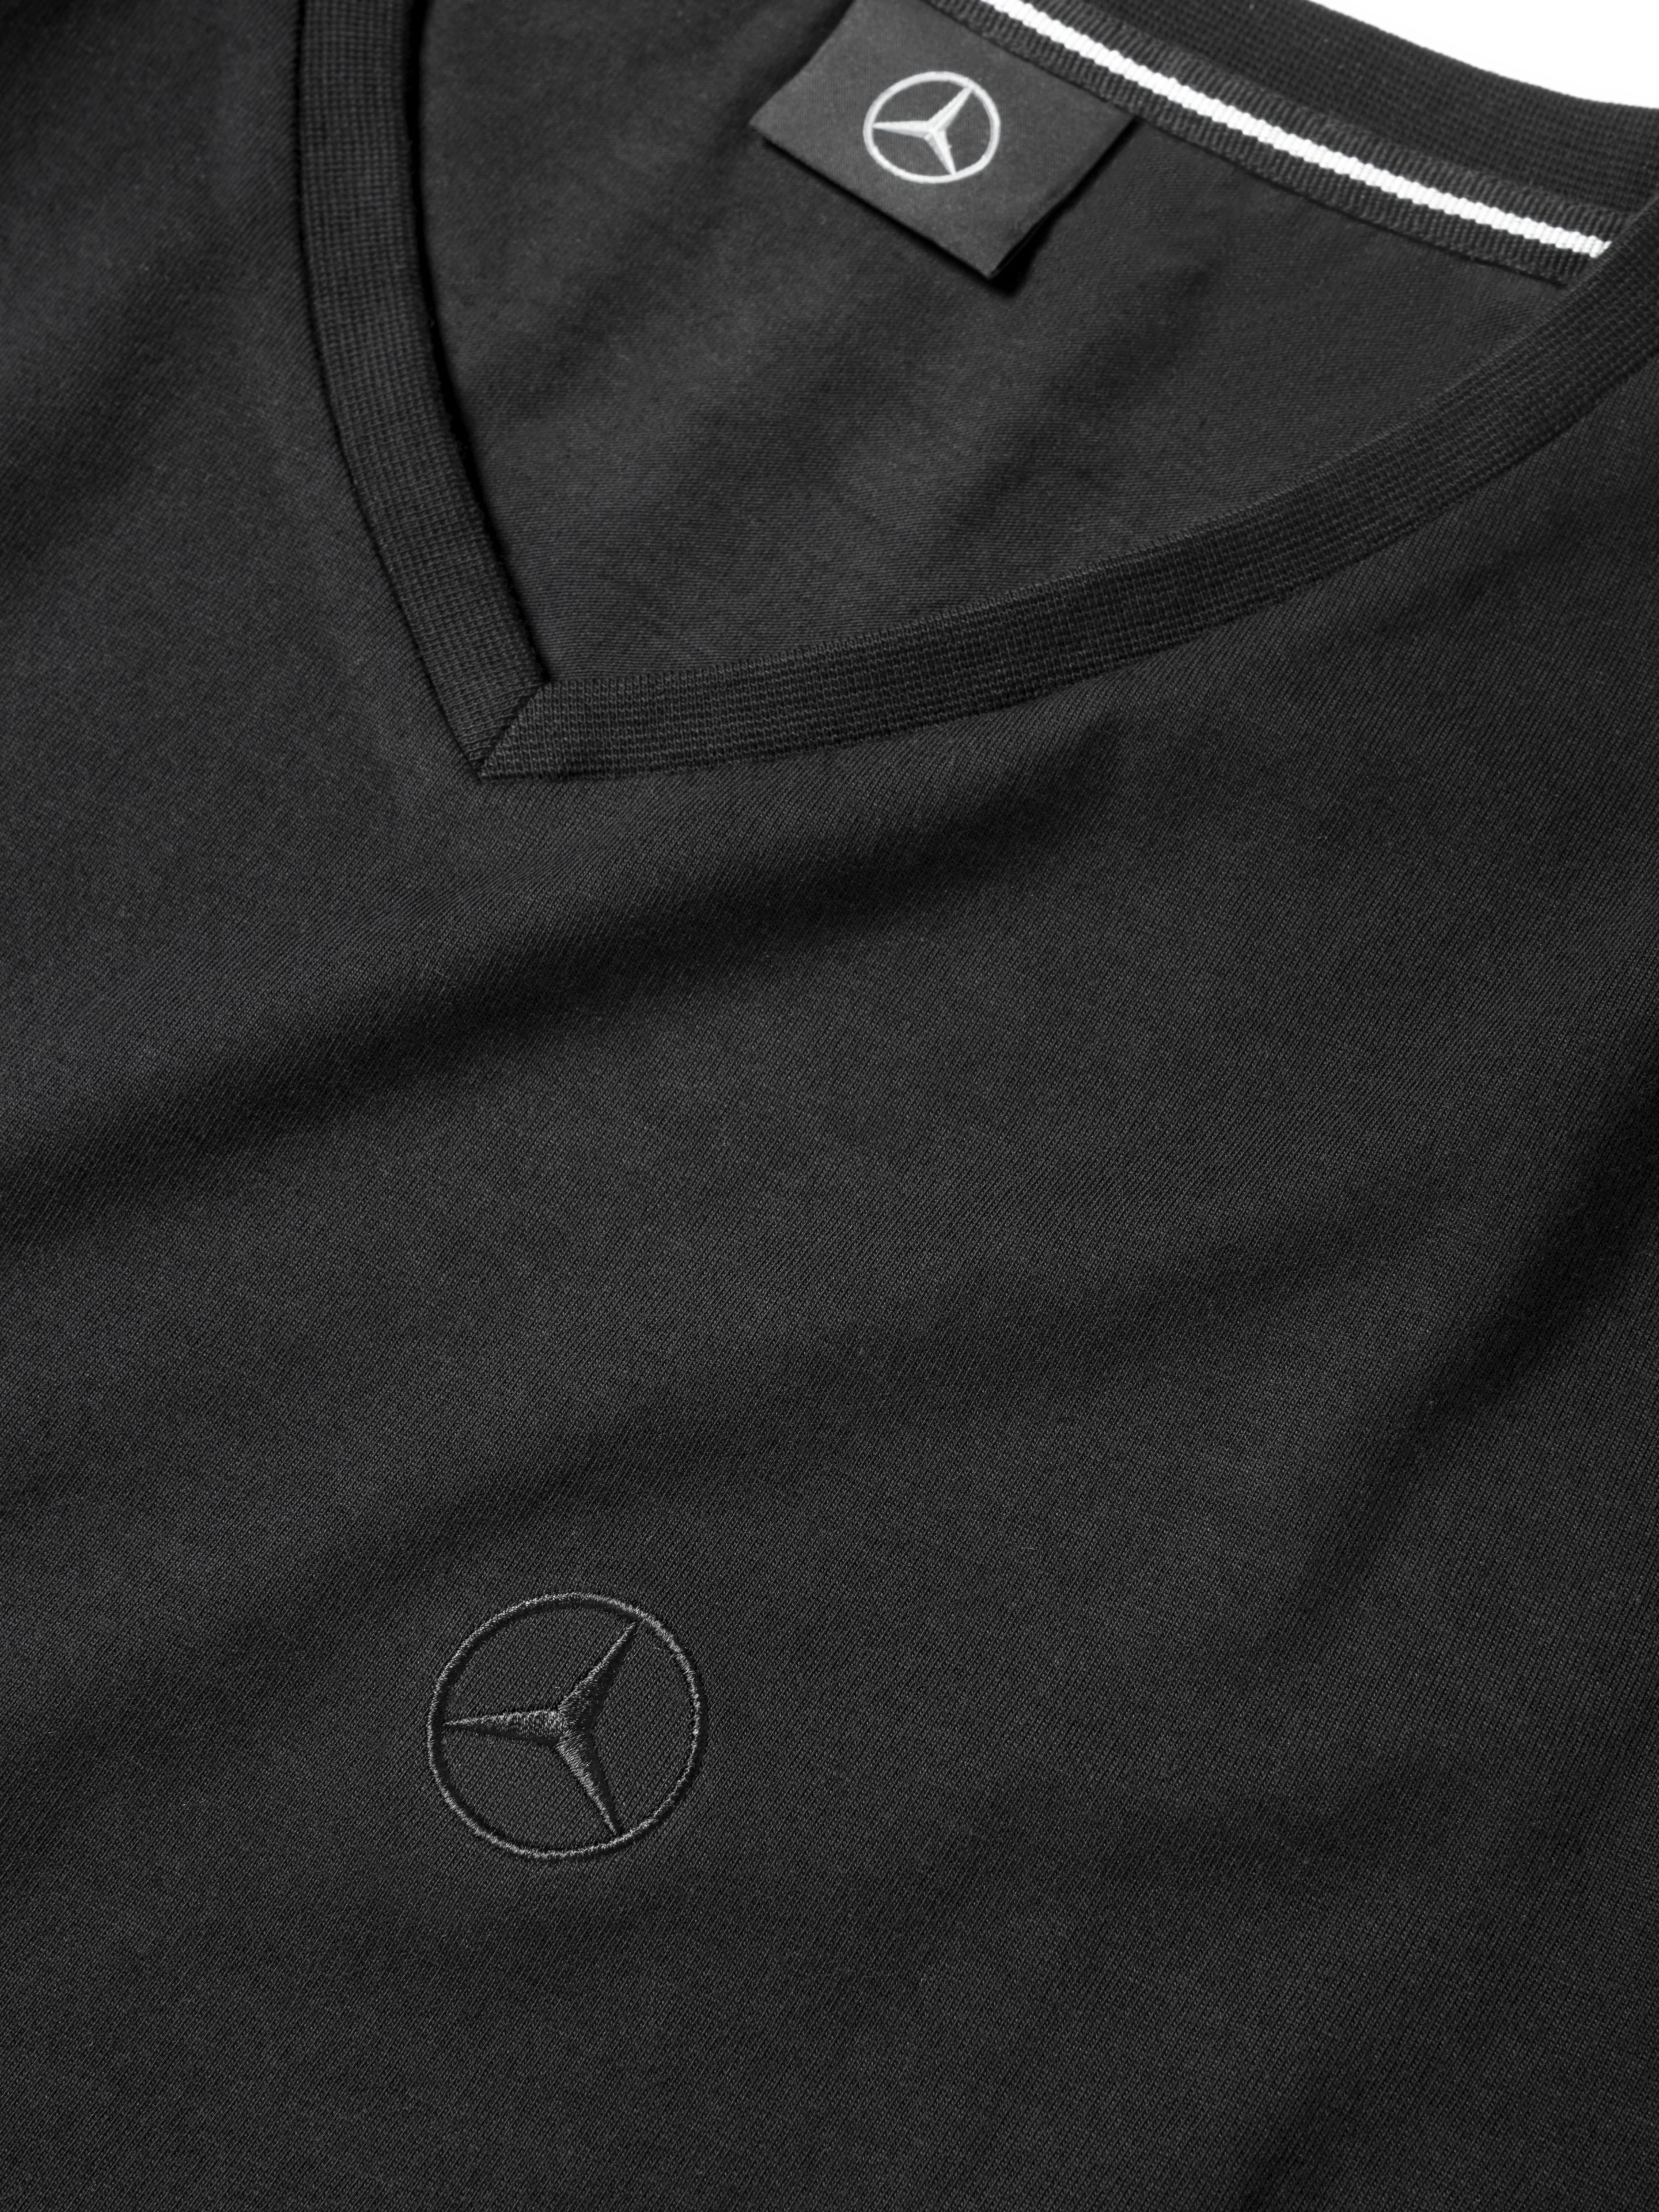 T-Shirt Herren - schwarz, L